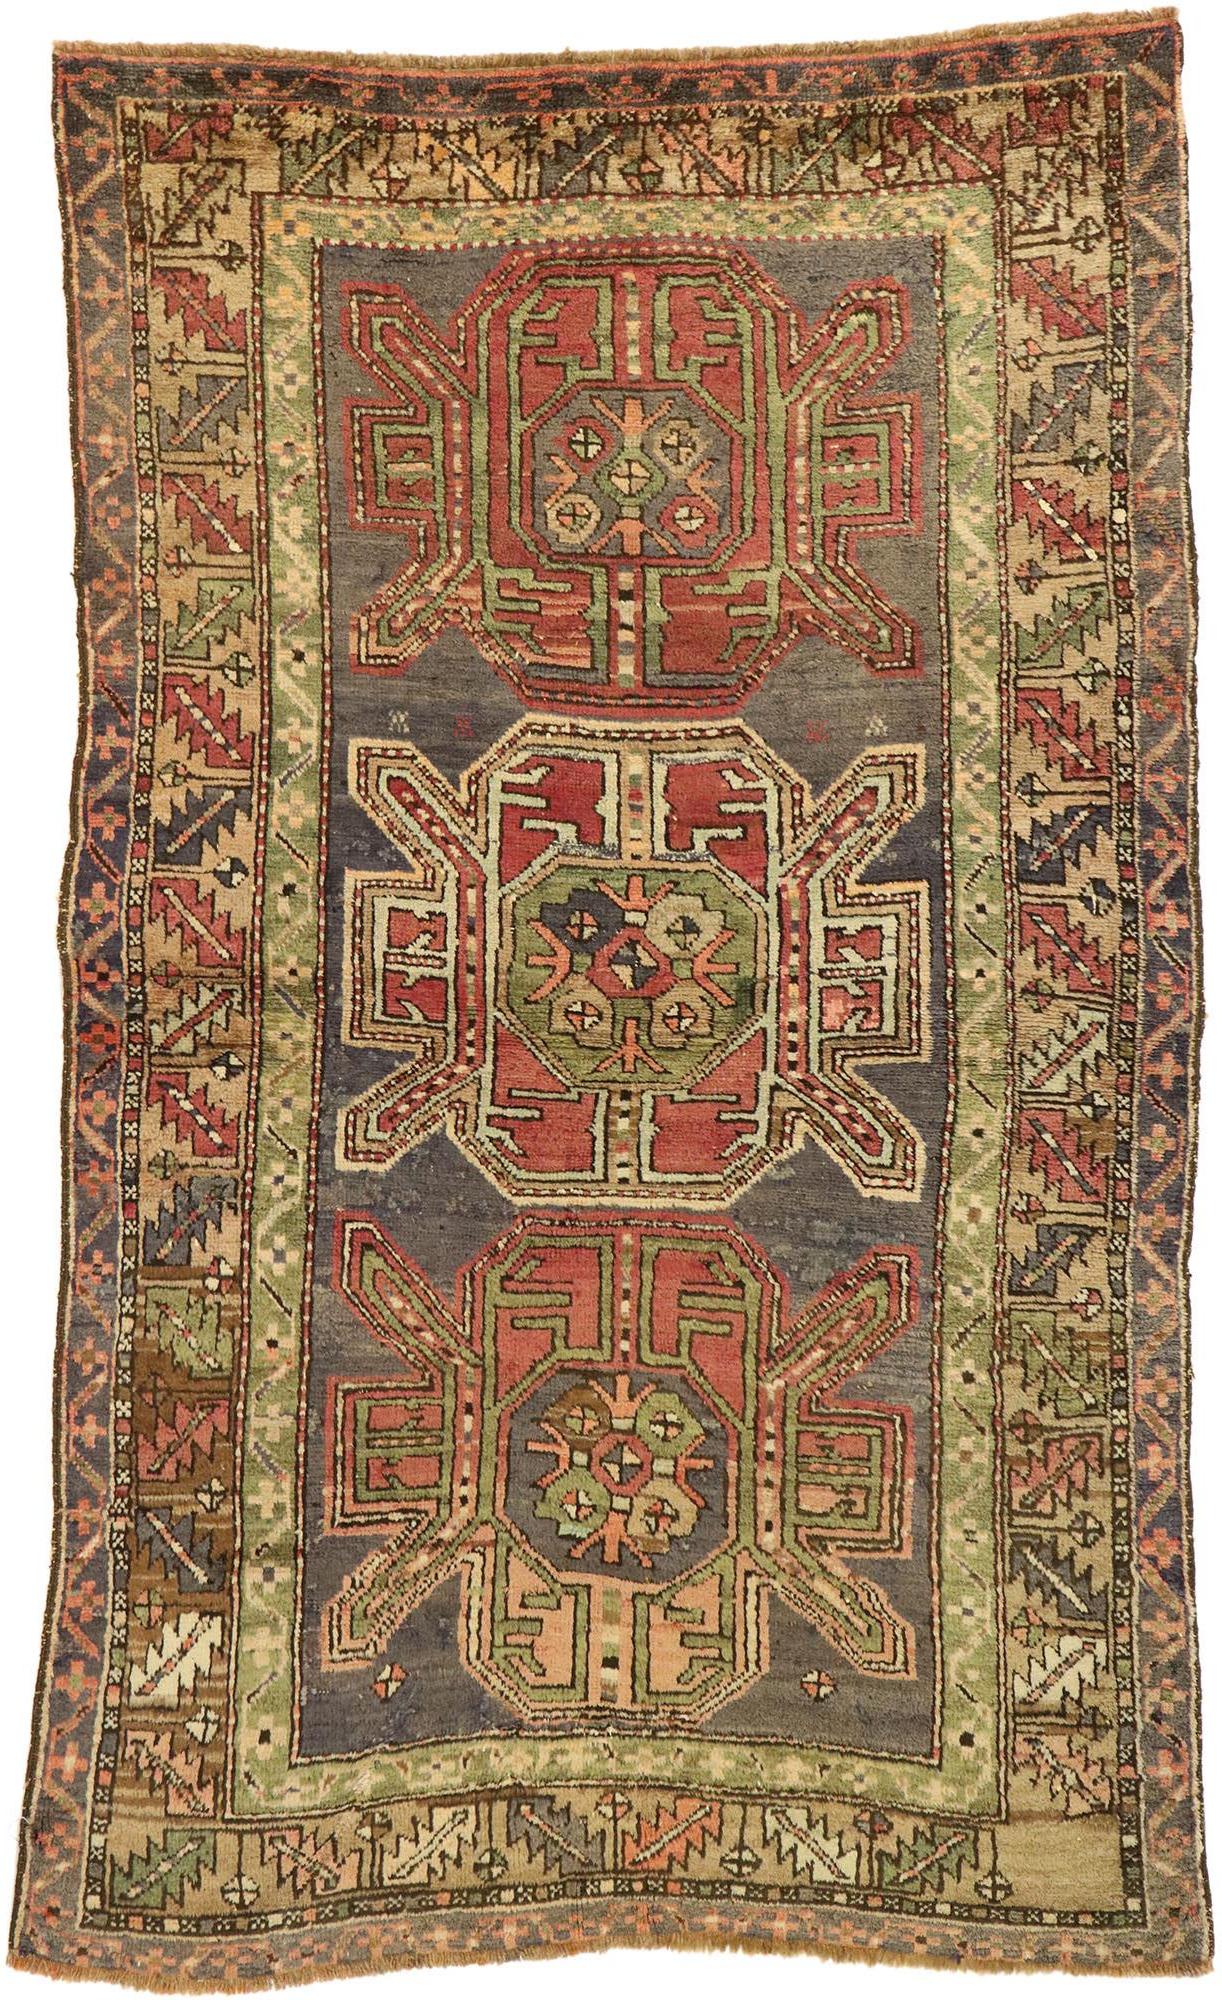 Vintage Turkish Oushak Rug with Tribal Style and Amulet Pattern